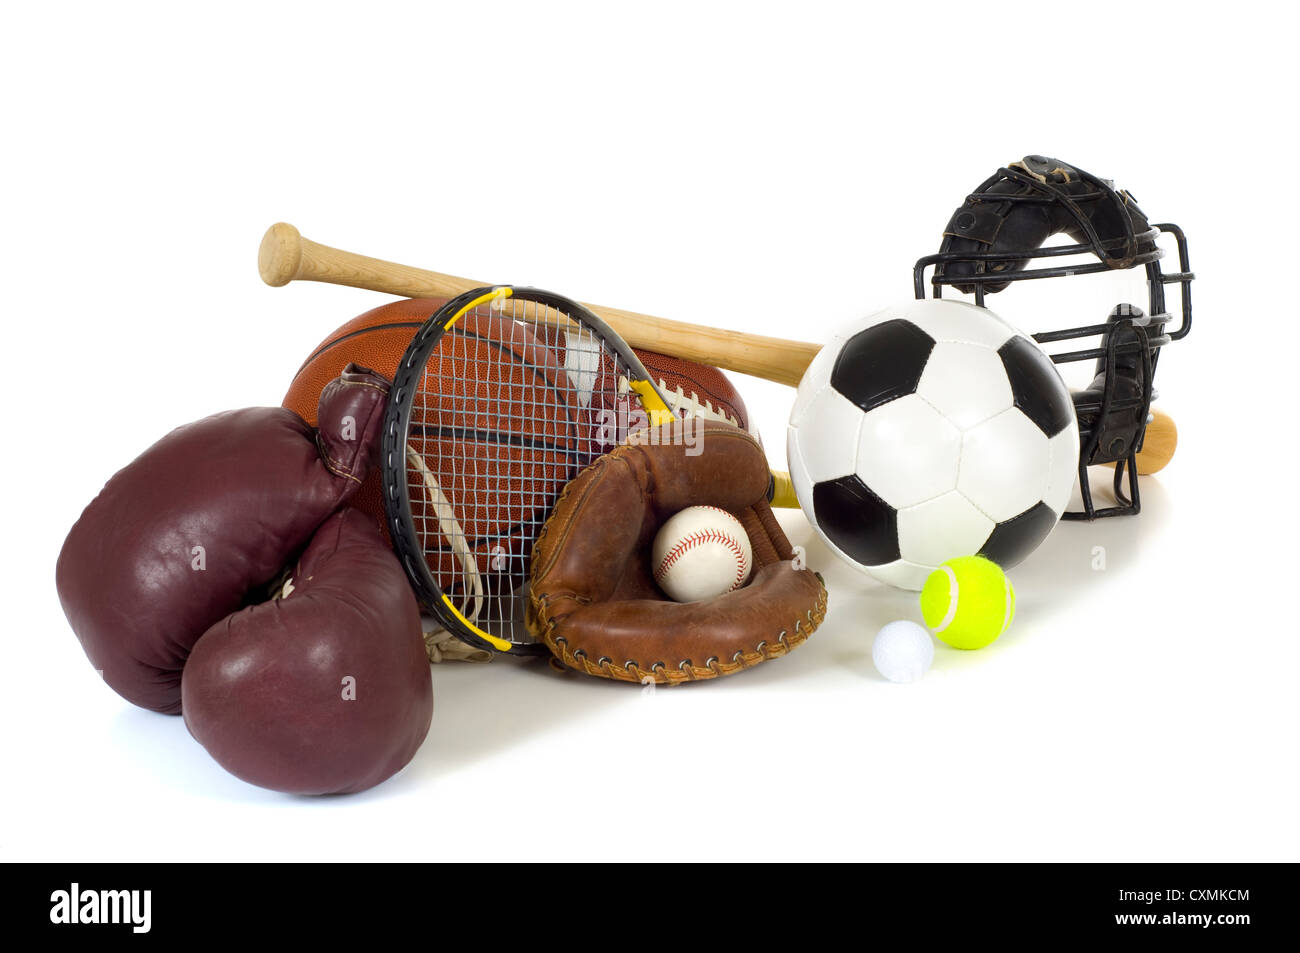 Verschiedene Sportgeräte wie Boxhandschuhe, Tennisschläger, Catchers Maske, Baseballschläger und verschiedenen Kugeln Stockfoto